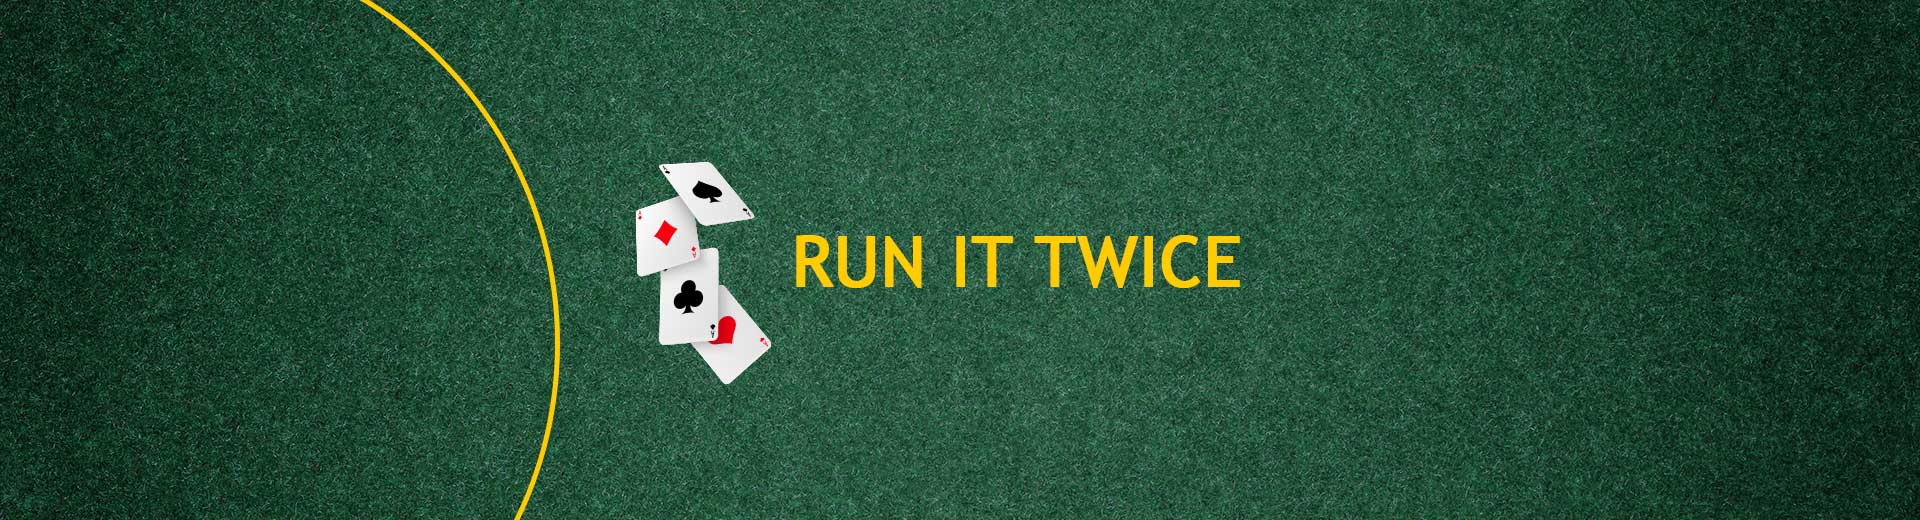 Run-It-Twice-Header-1920x520